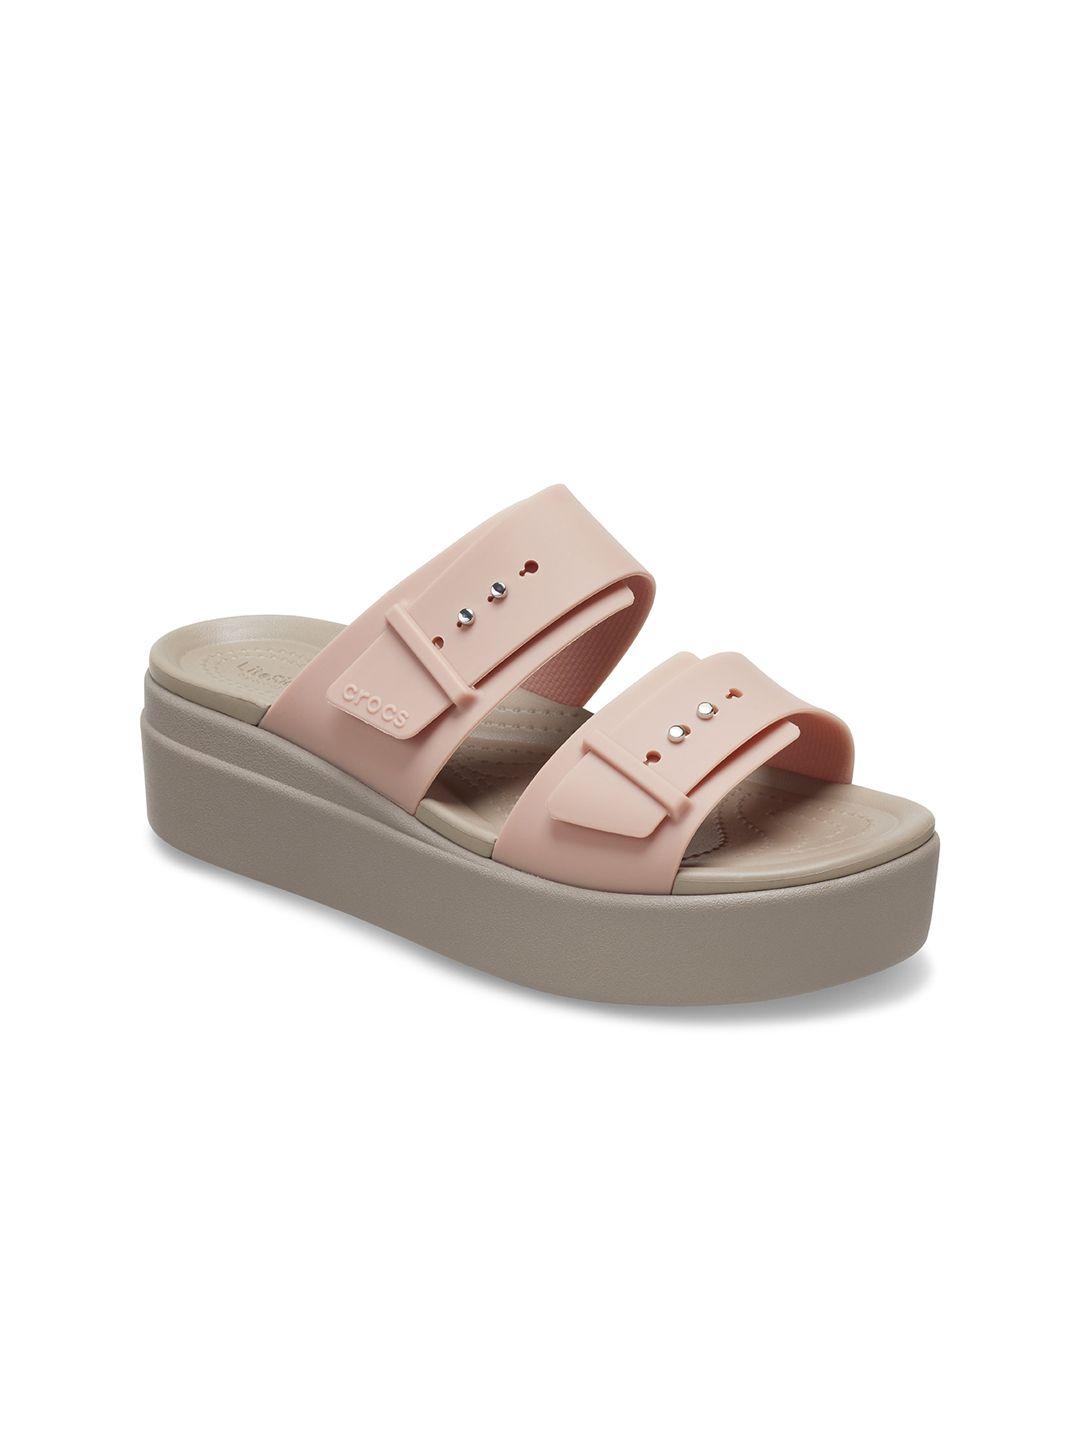 crocs-two-strap-flatform-heels-with-buckles